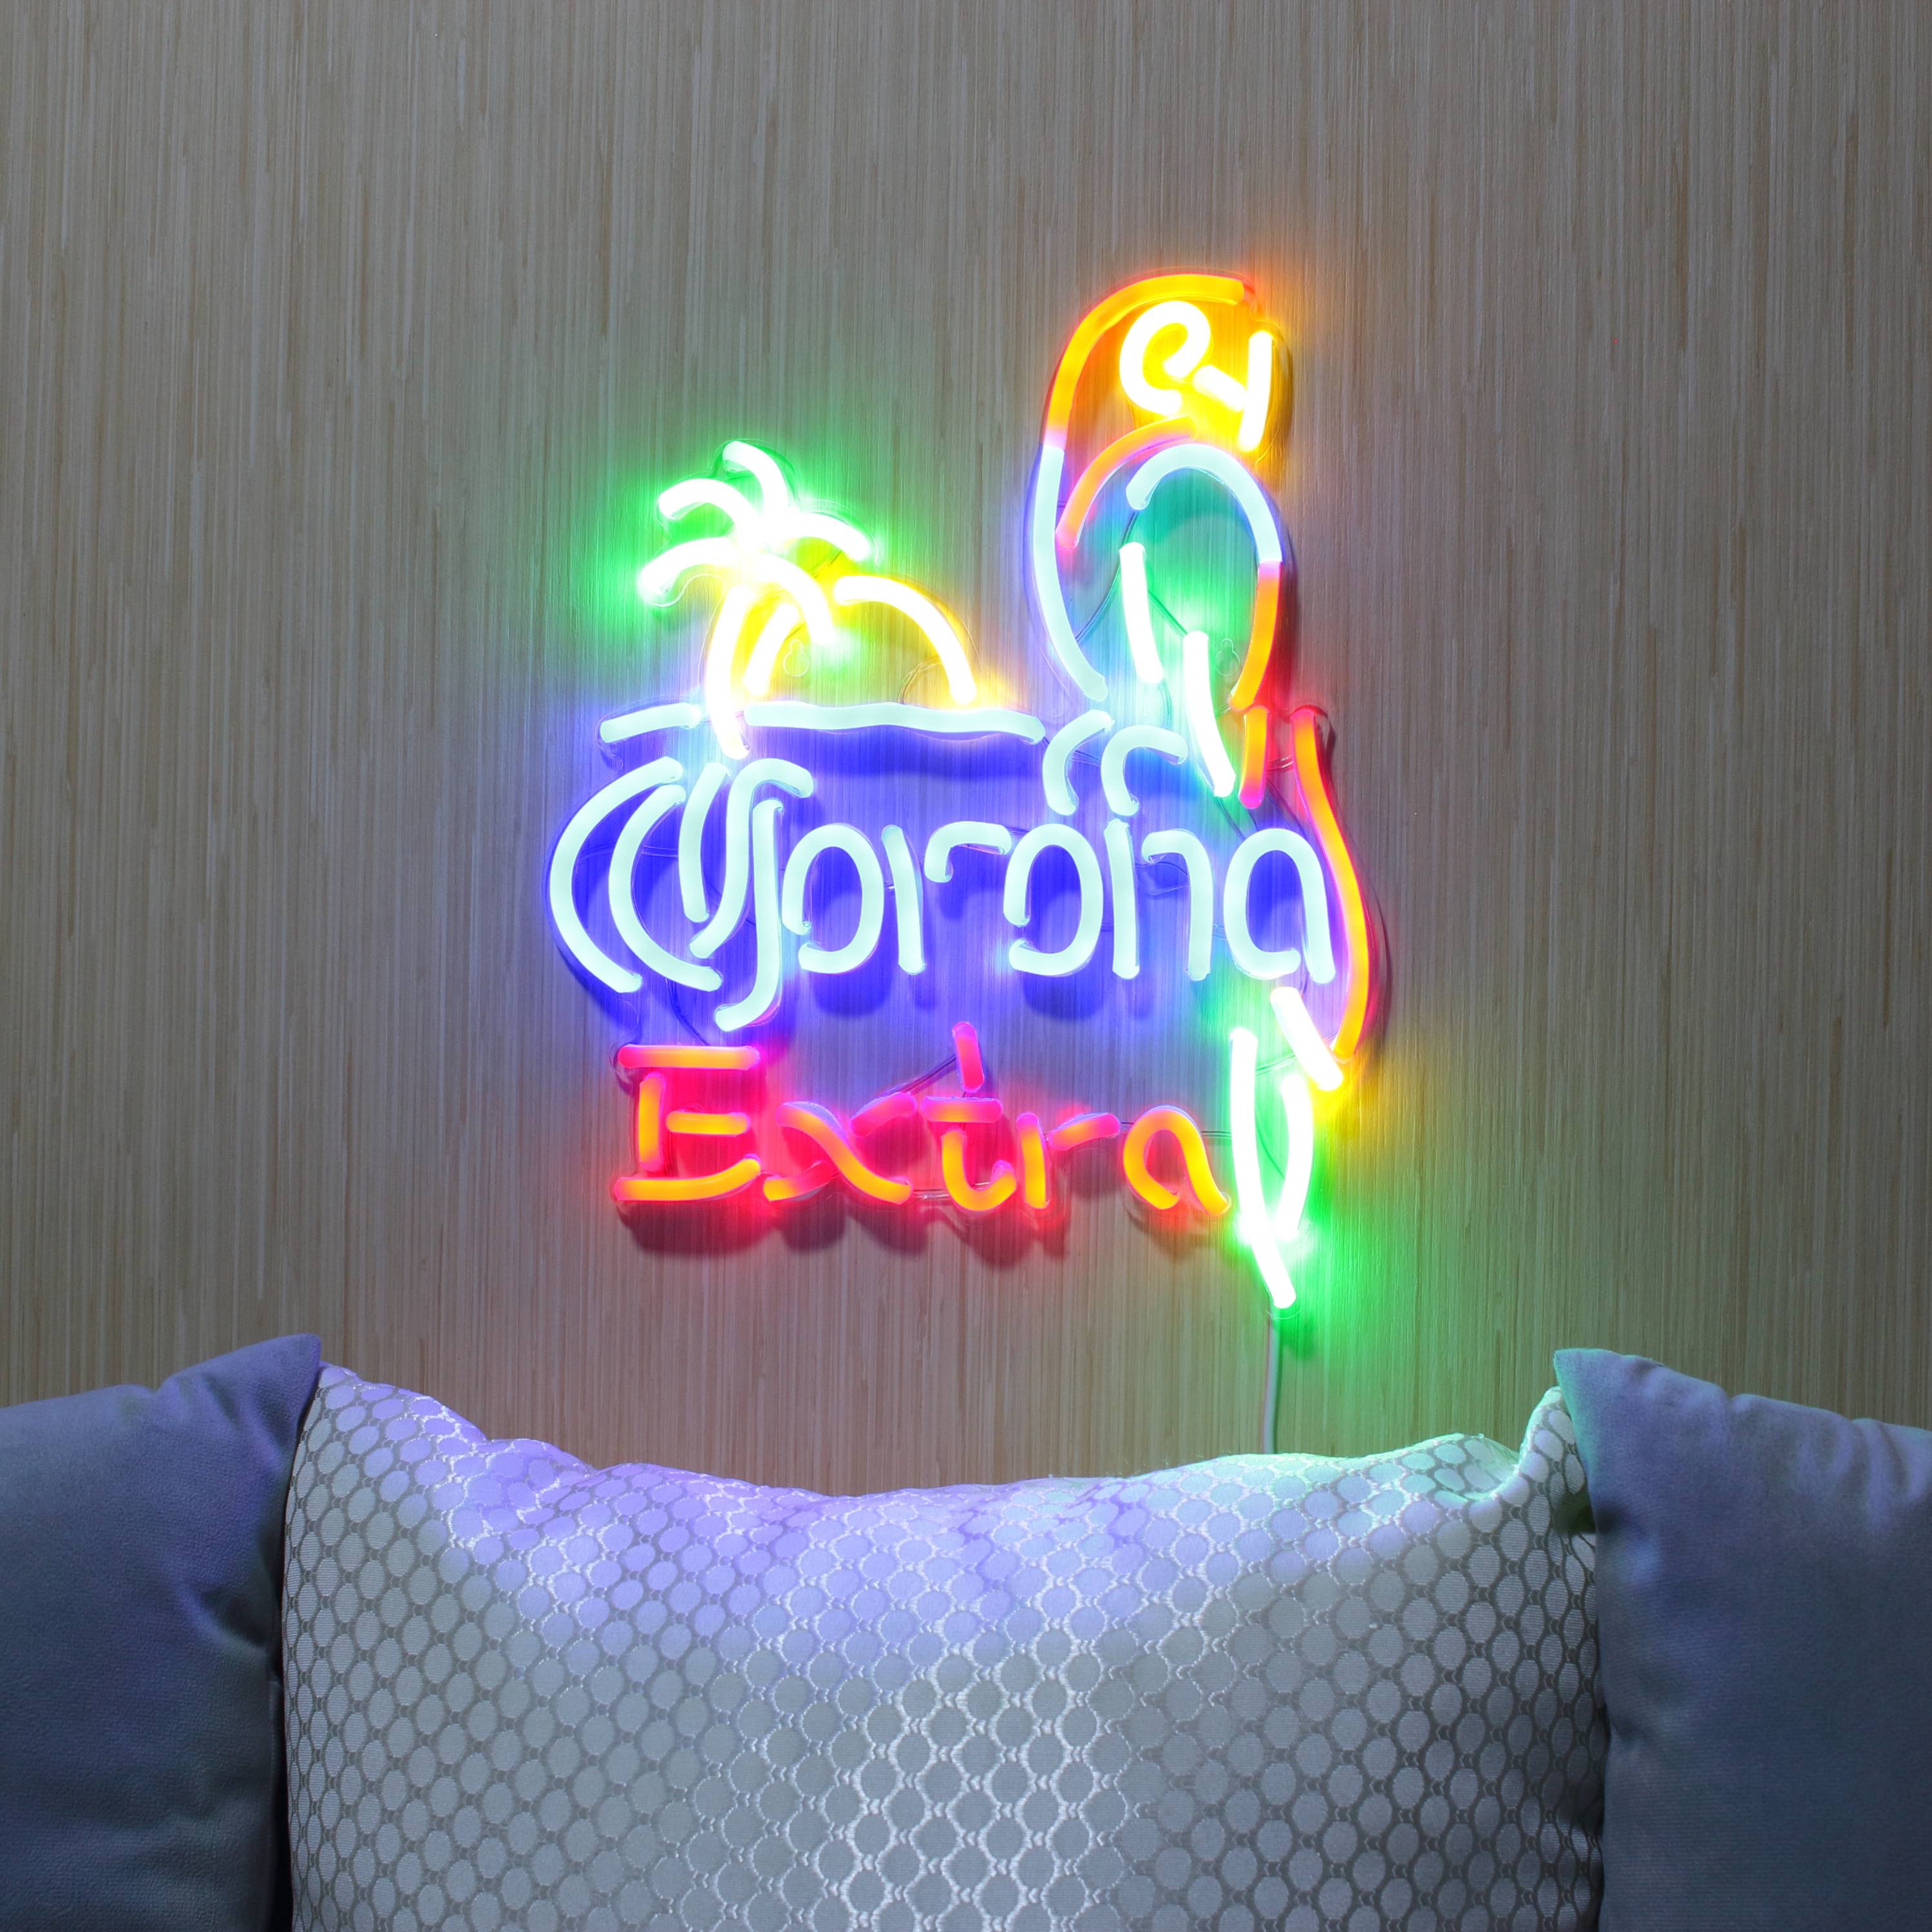 Corona Extra with Cadinal Large Flex Neon LED Sign